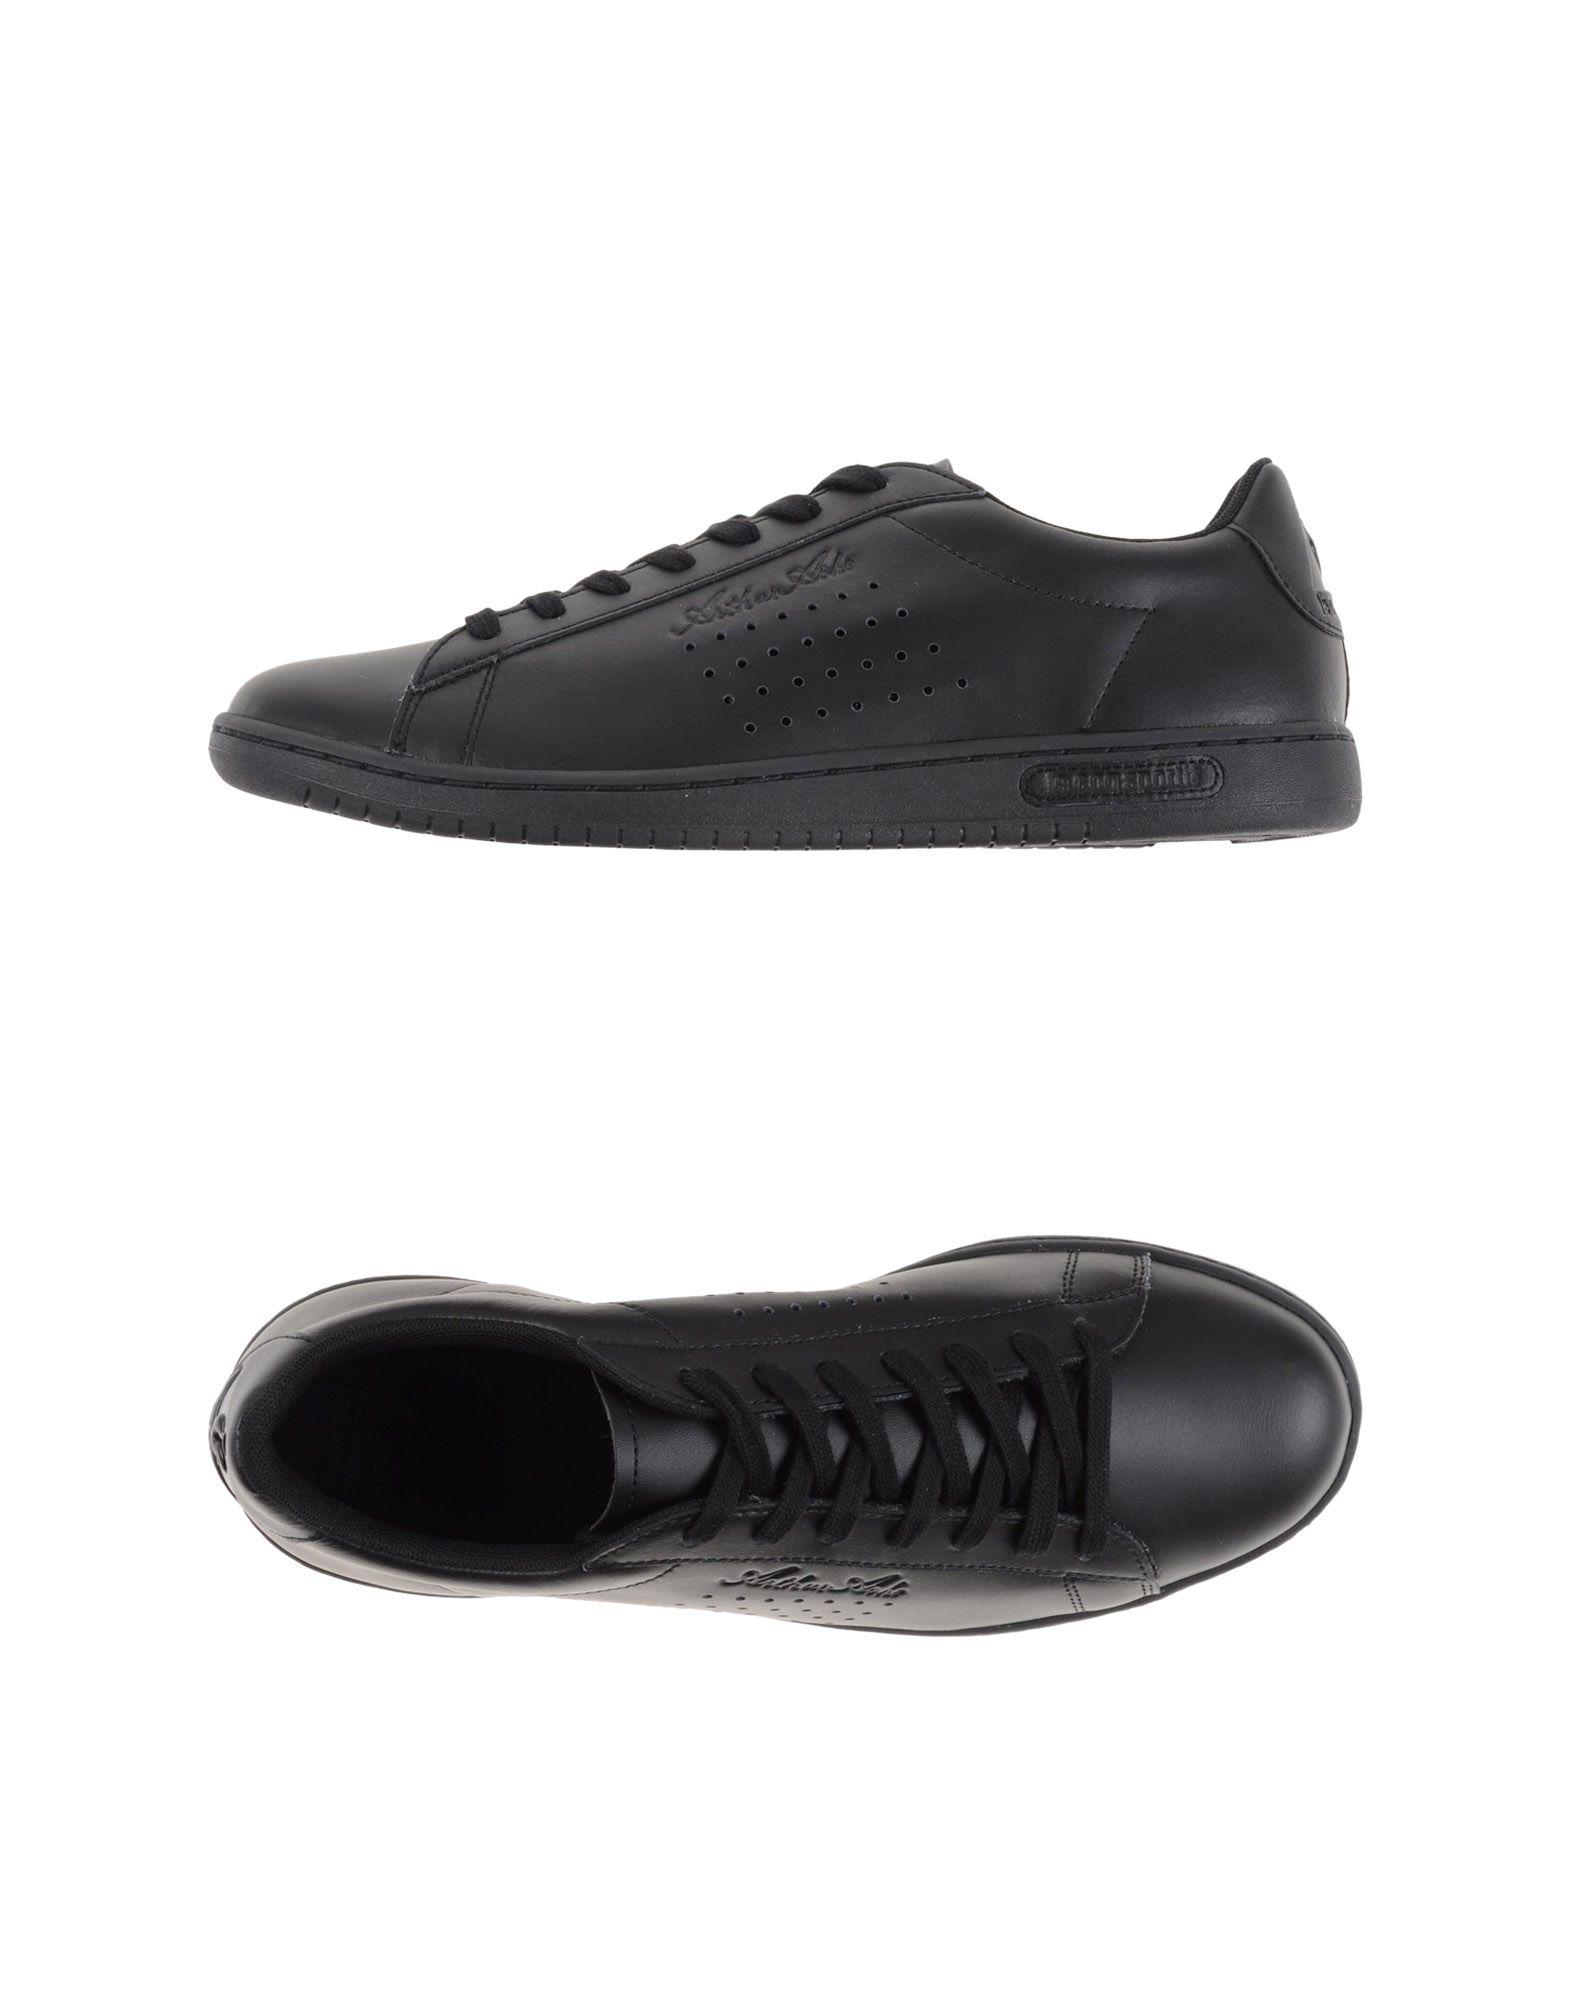 Le Coq Sportif Leather Low-tops & Sneakers in Black for Men - Lyst